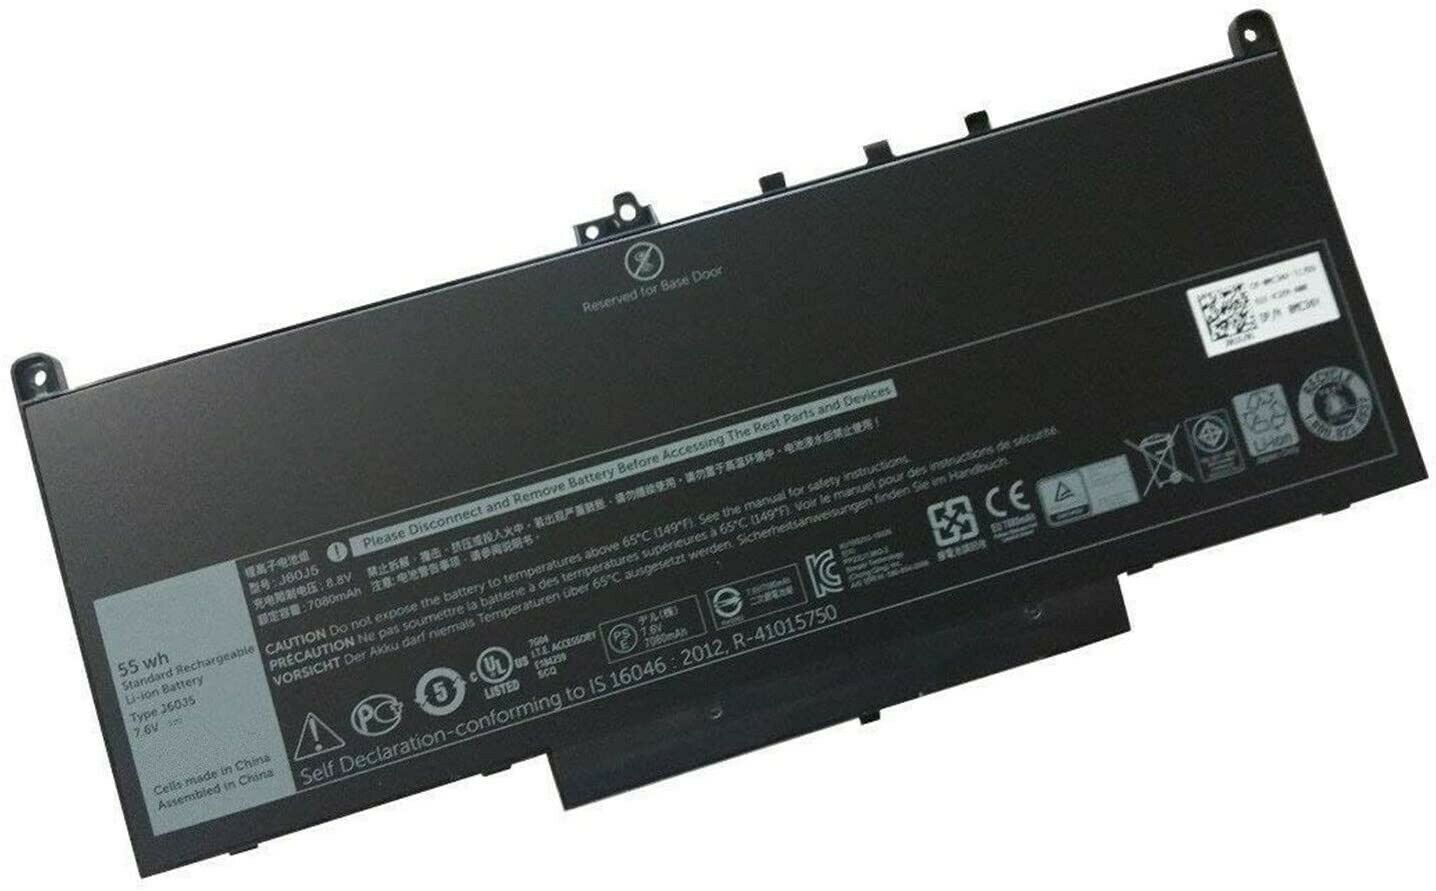 Batterie pour Dell Latitude E7270,E7470 0MC34Y 242WD J60J5 MC34Y(compatible)